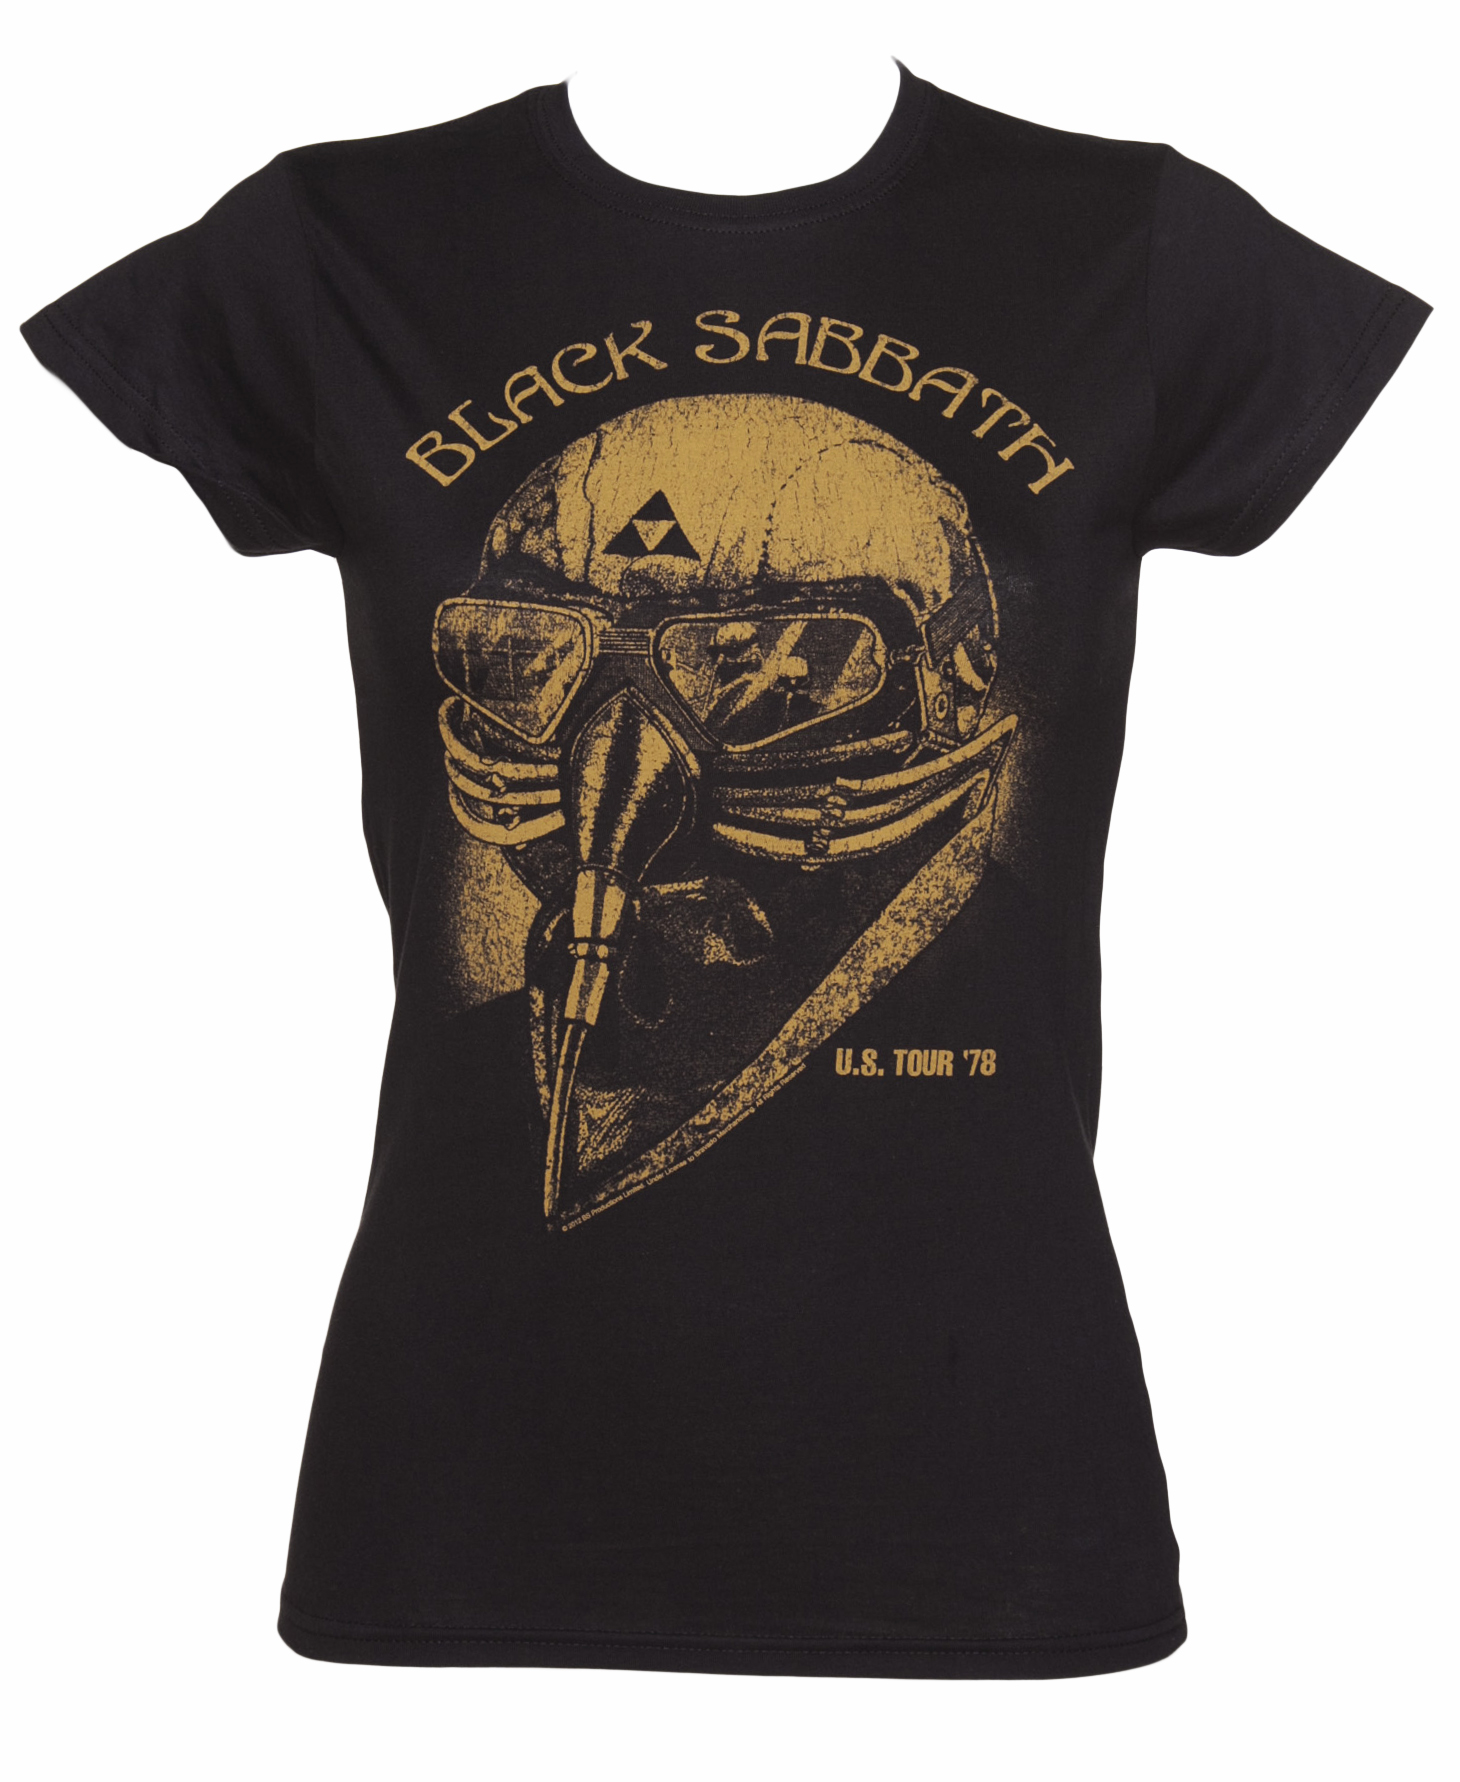 Ladies Black Sabbath Tour T-Shirt